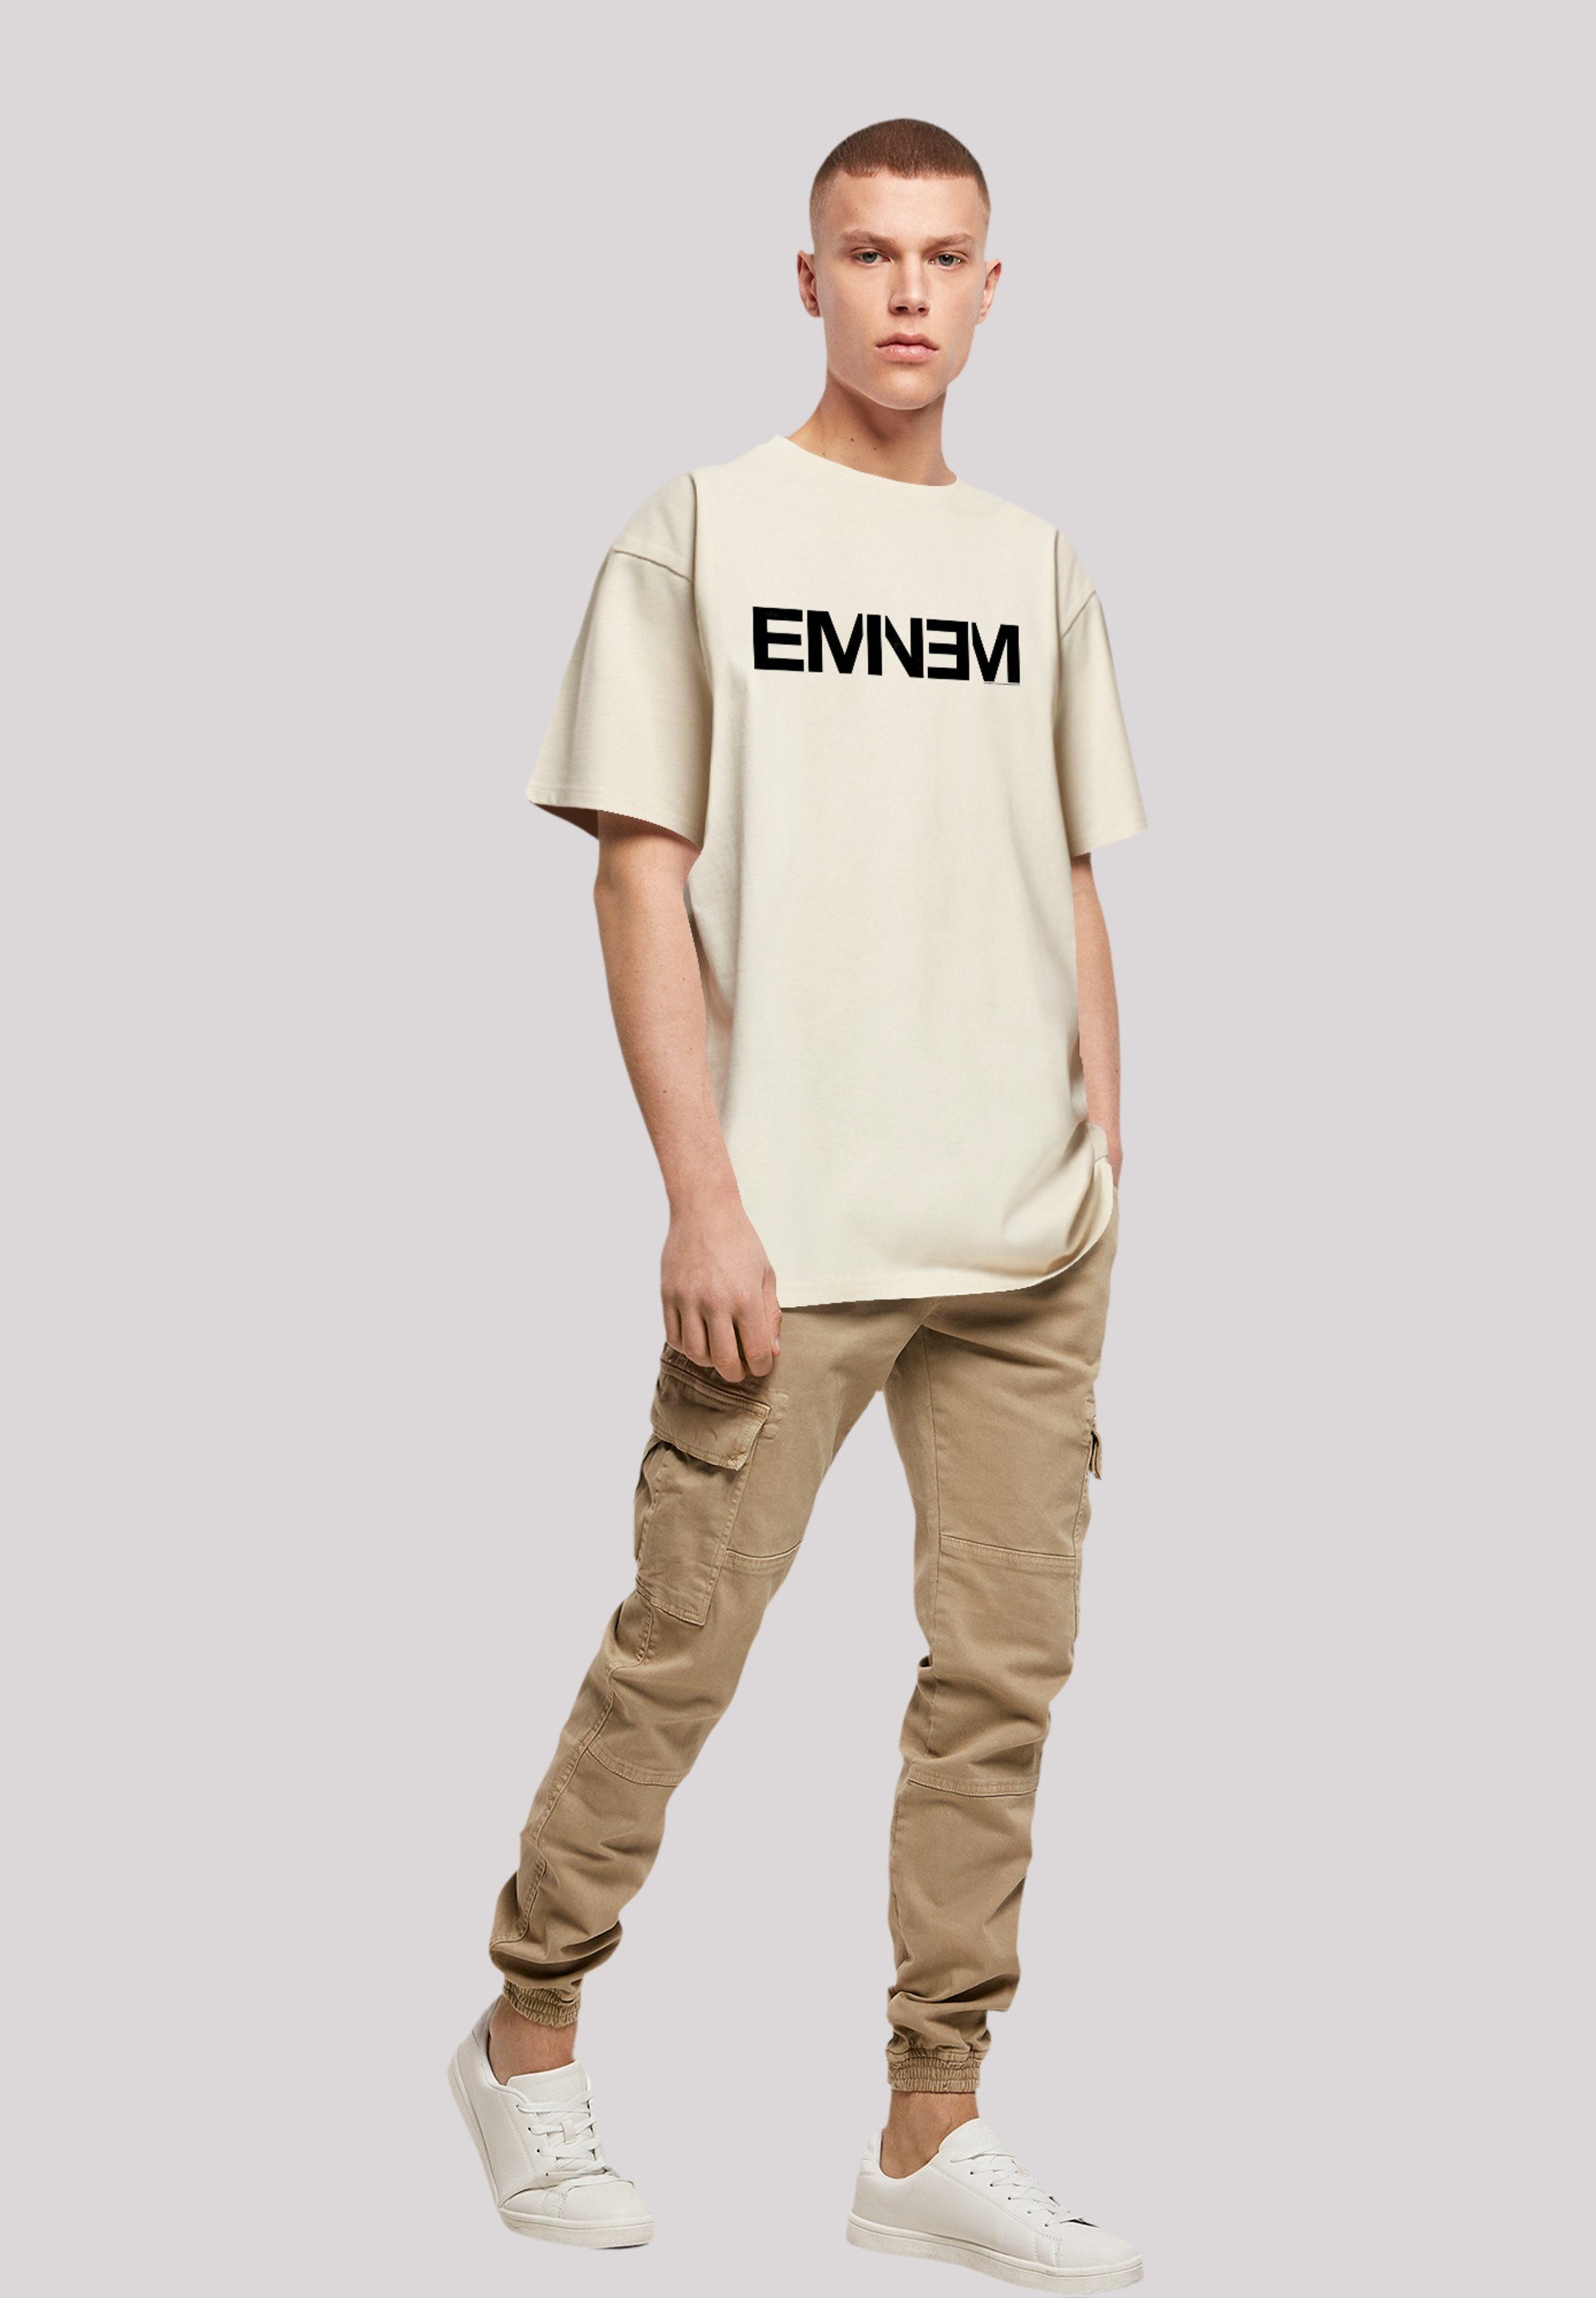 sand Musik Rap F4NT4STIC Music T-Shirt Hop Qualität, Premium Eminem Hip